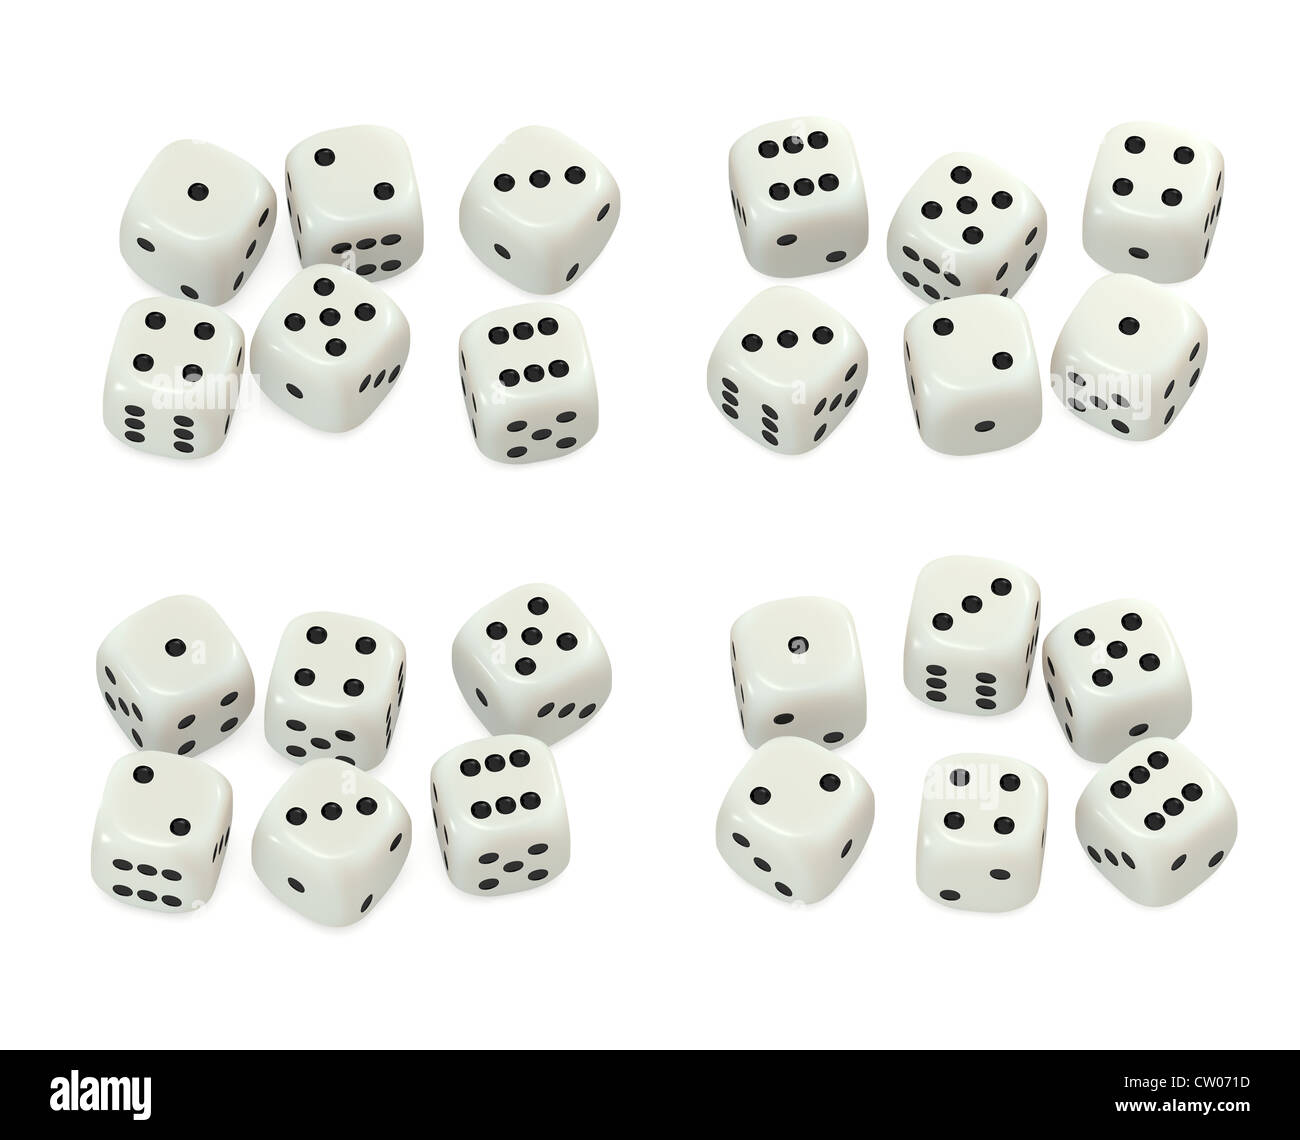 Dice set - white dice numbers Stock Photo